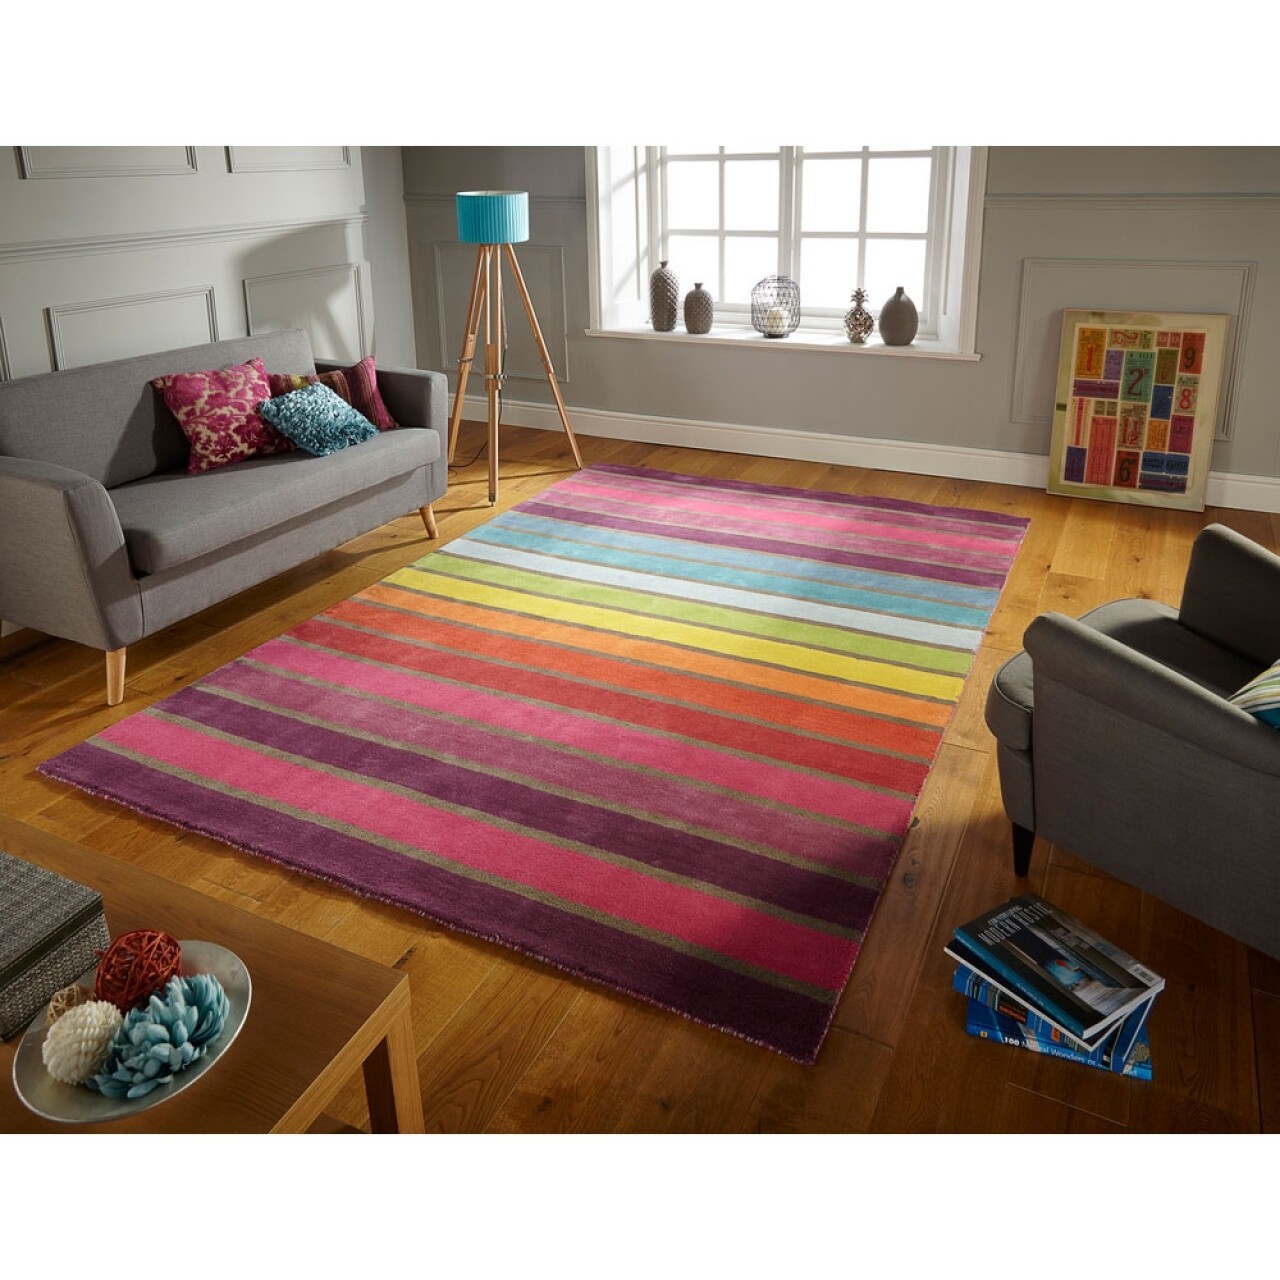 Flair rugs ilusion candy multi color szőnyeg, flair szőnyegek, 160 x 230 cm, 100% gyapjú, sokszínű